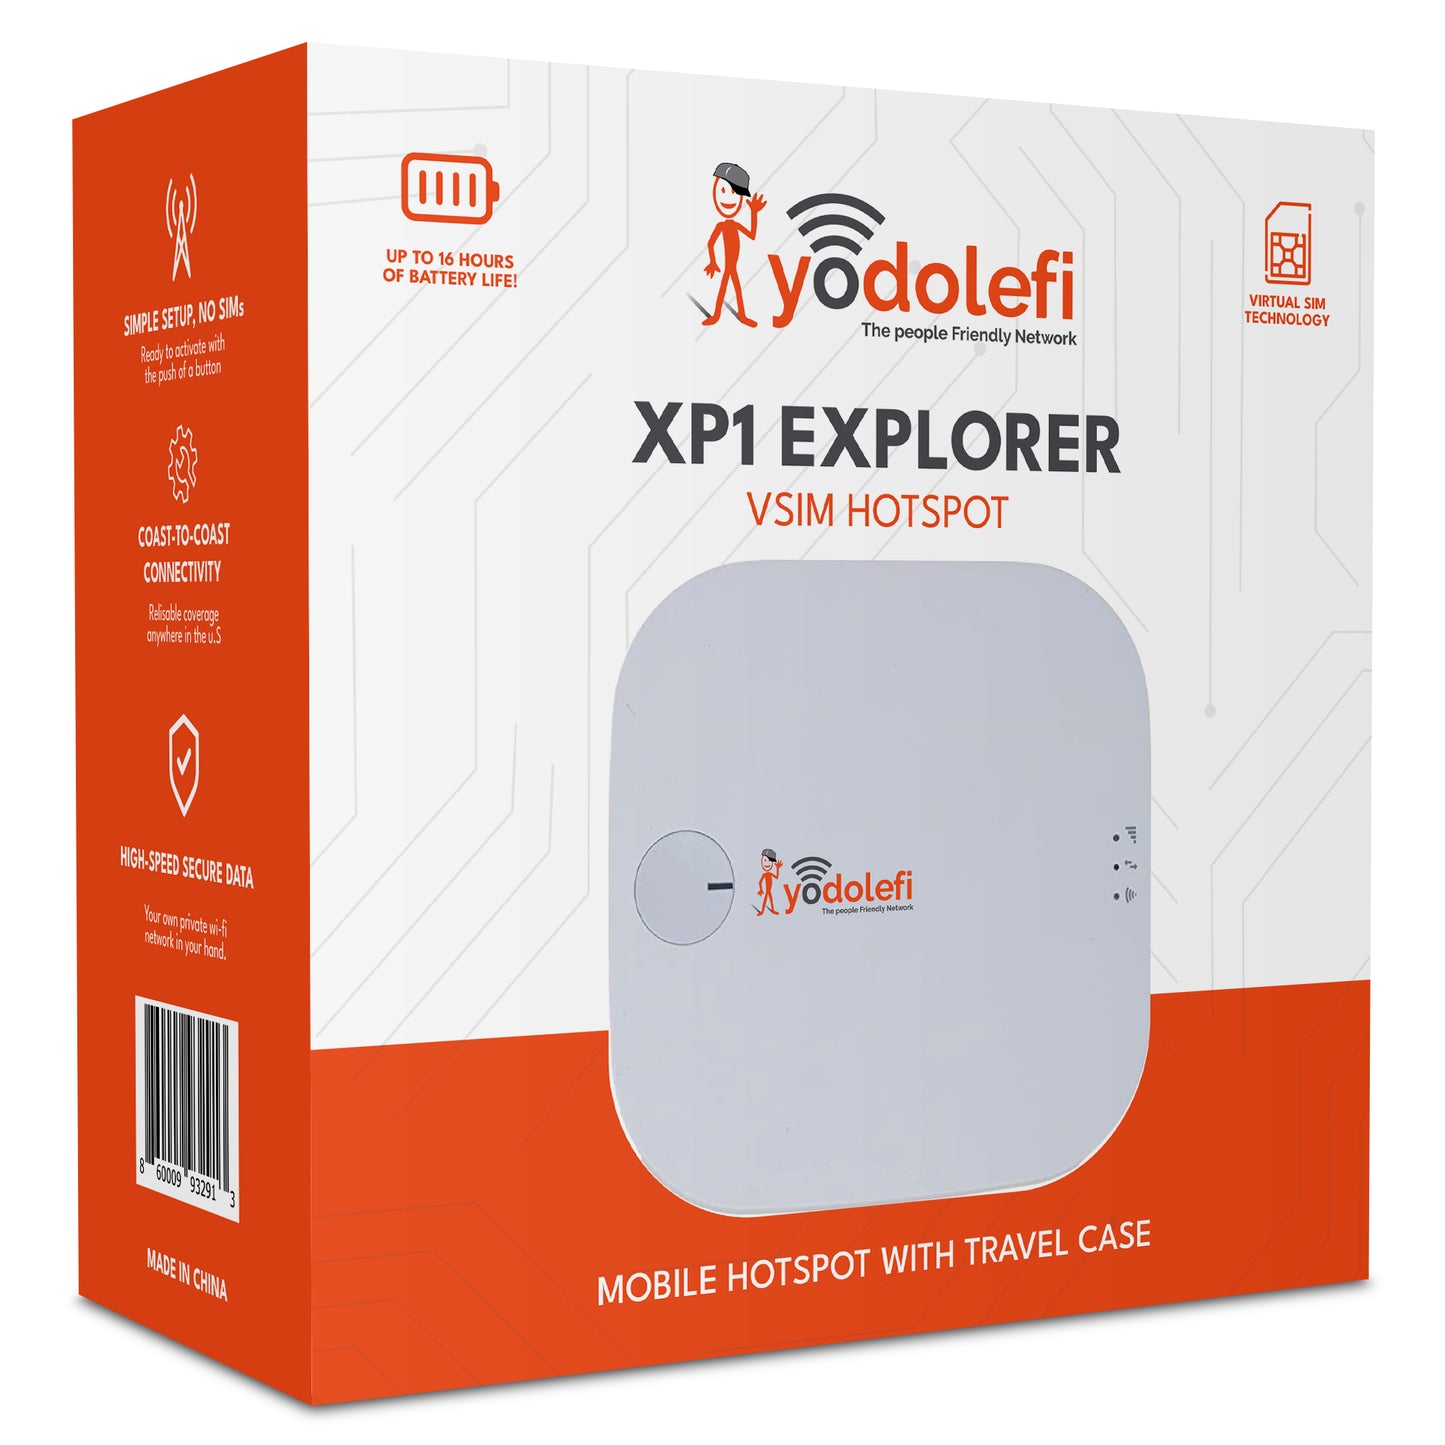 YodoleFi XP1 Explorer vSIM Hotspot